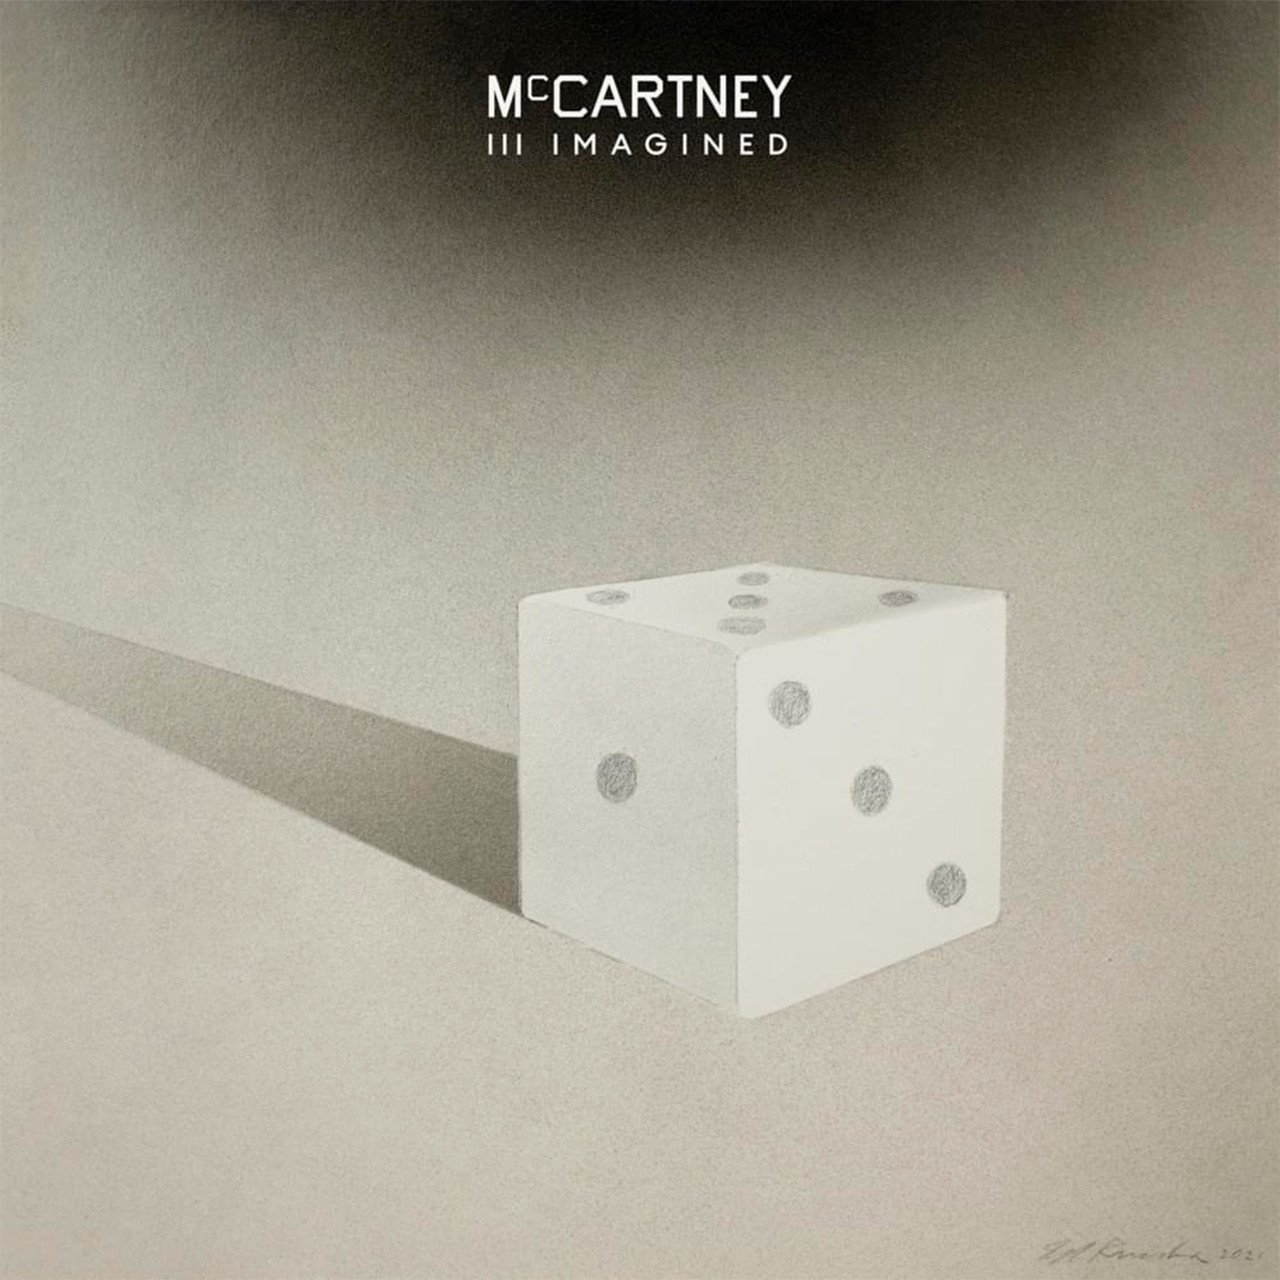 Рок Capitol US Paul McCartney - McCartney III Imagined рок capitol us mccartney paul egypt station deluxe